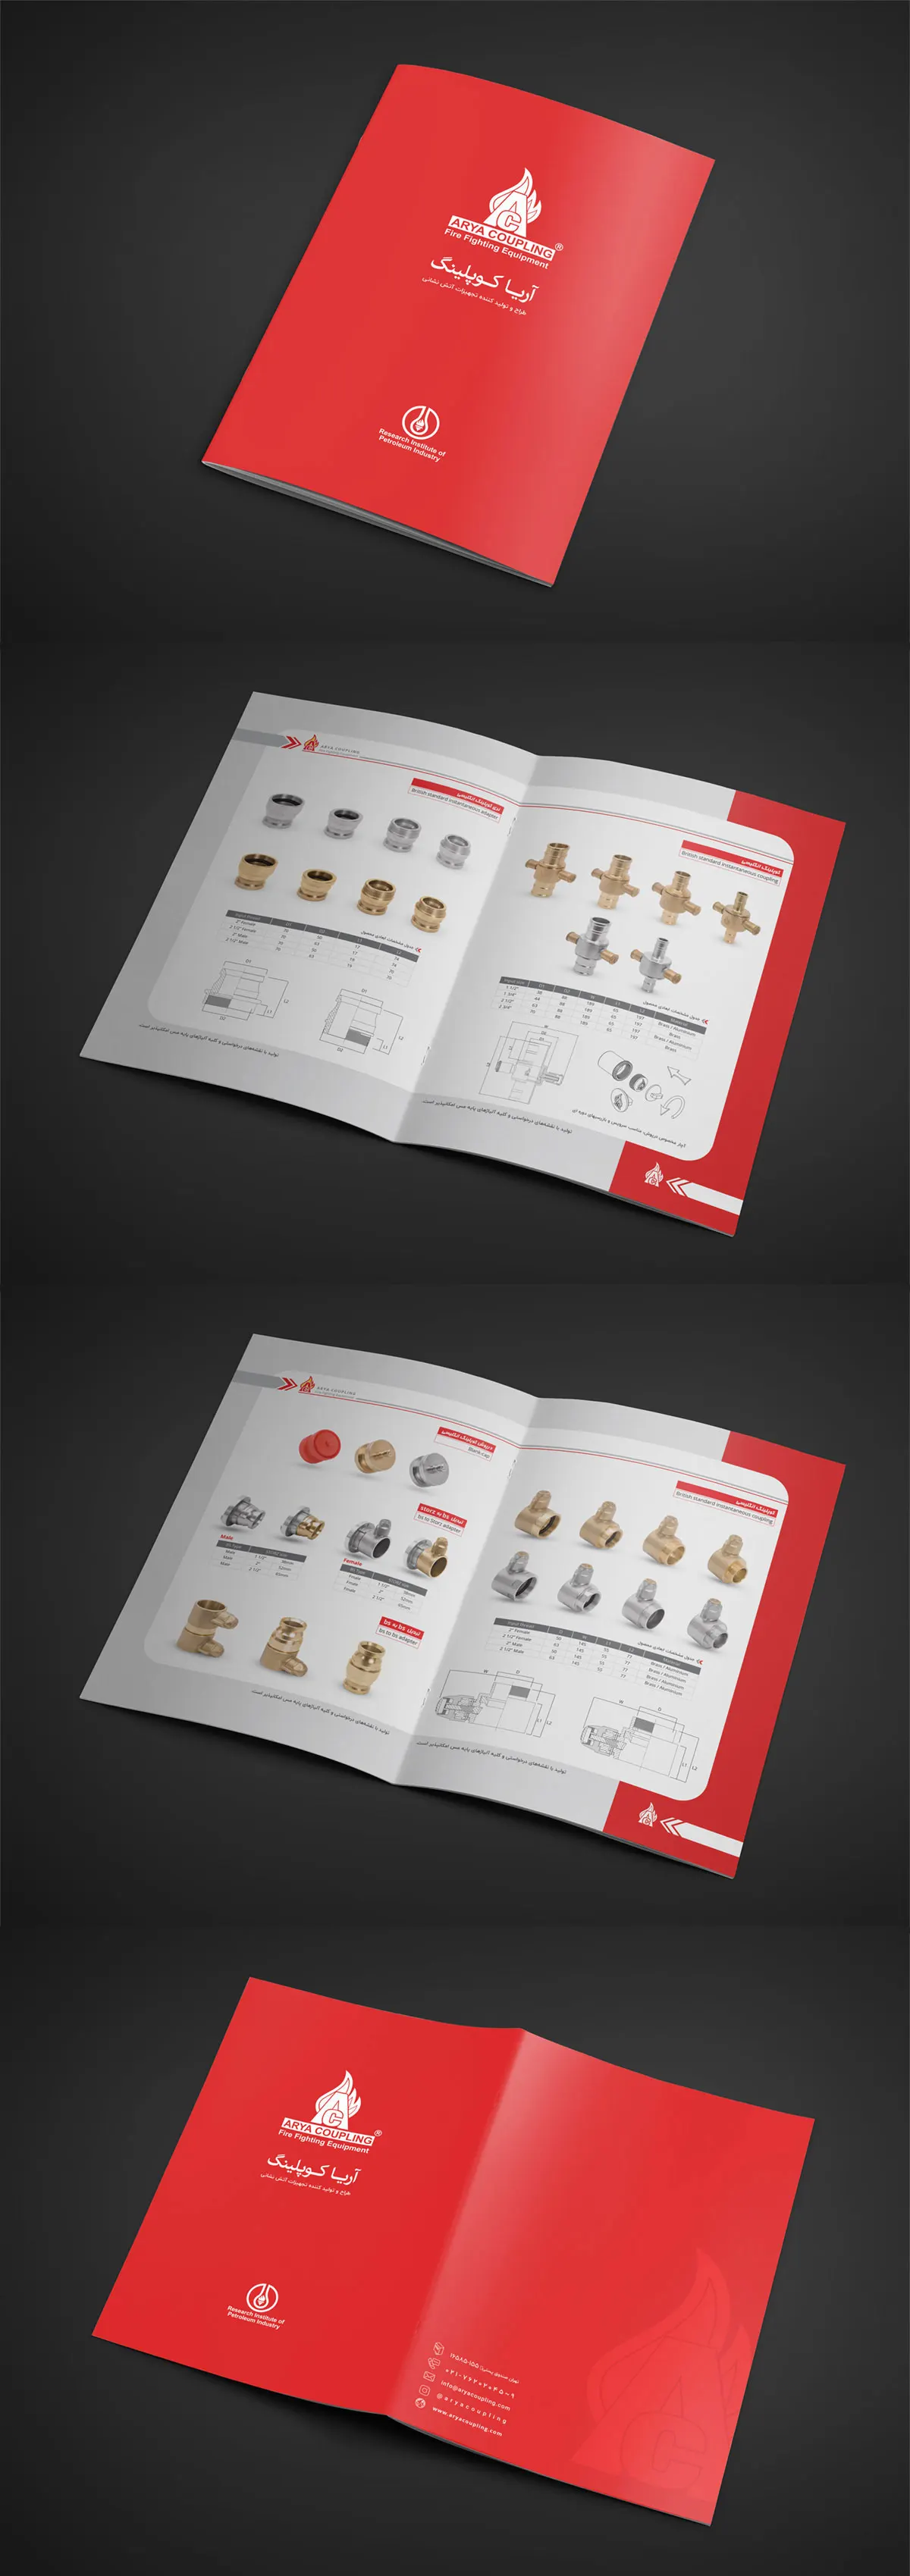 Aria Coupling Company catalog design | Hossein Donyadideh